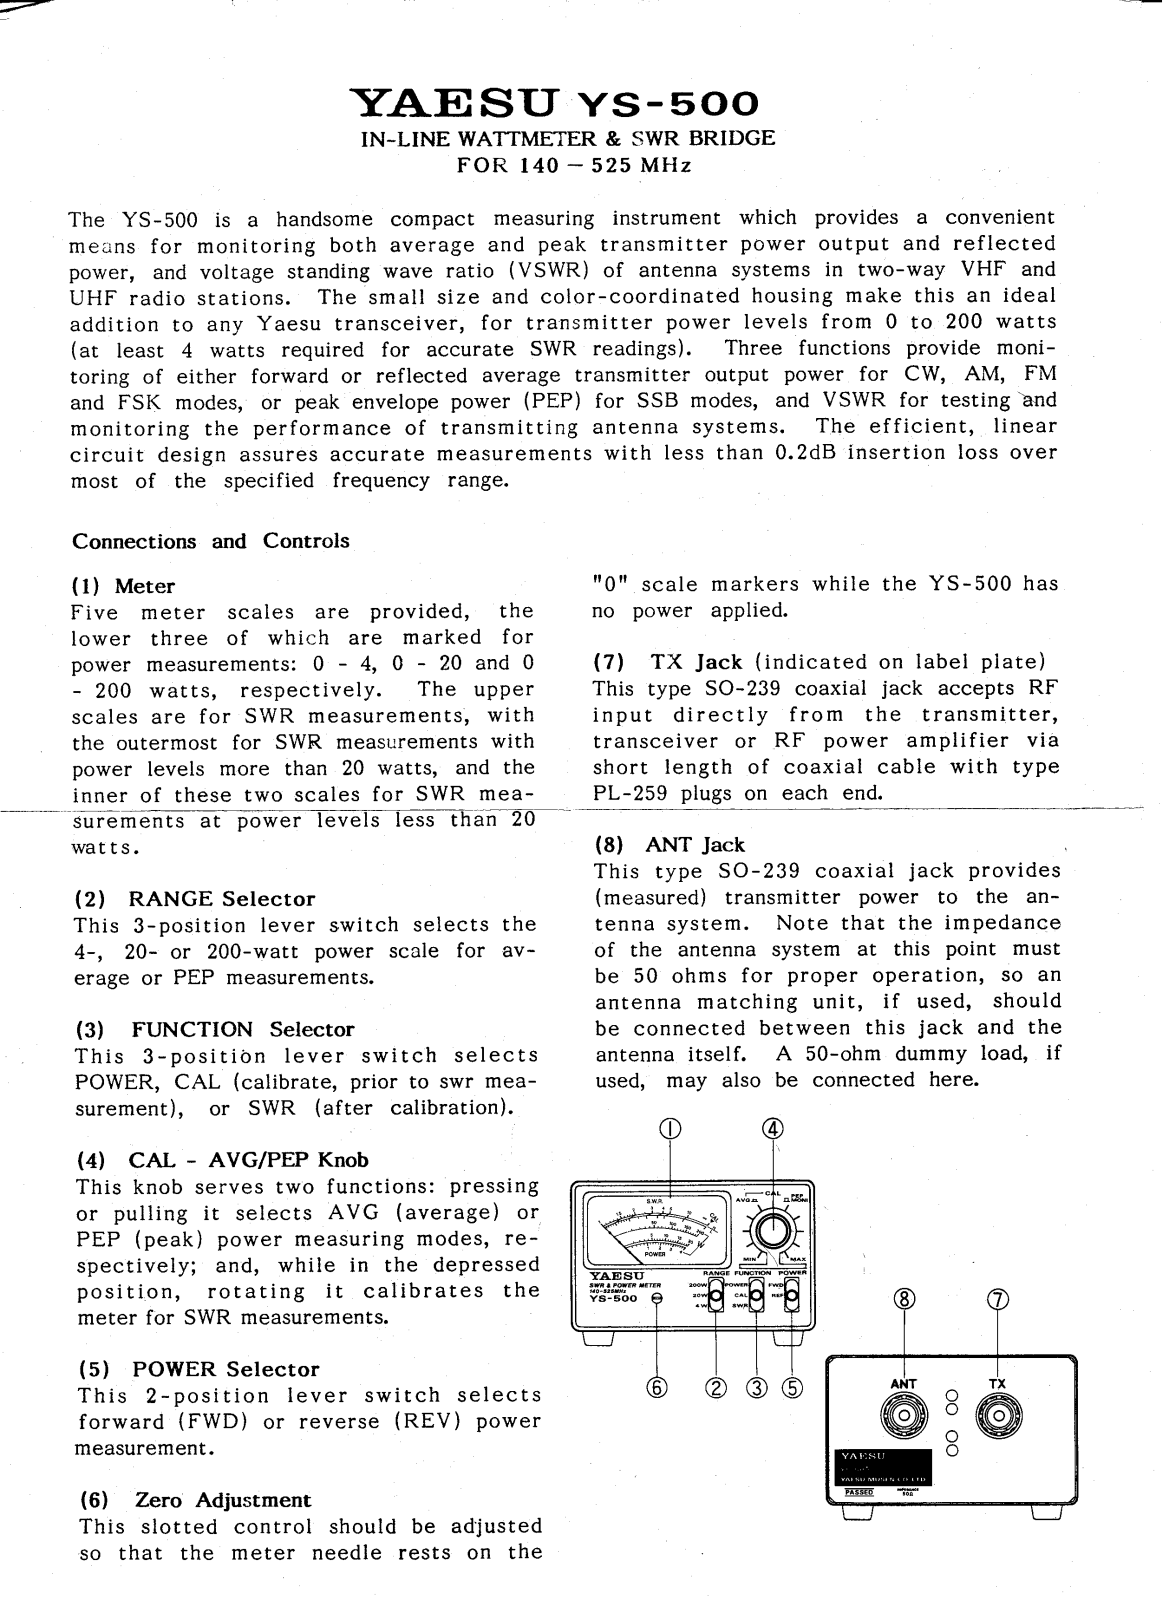 Yaesu YS-500 Operating Manual